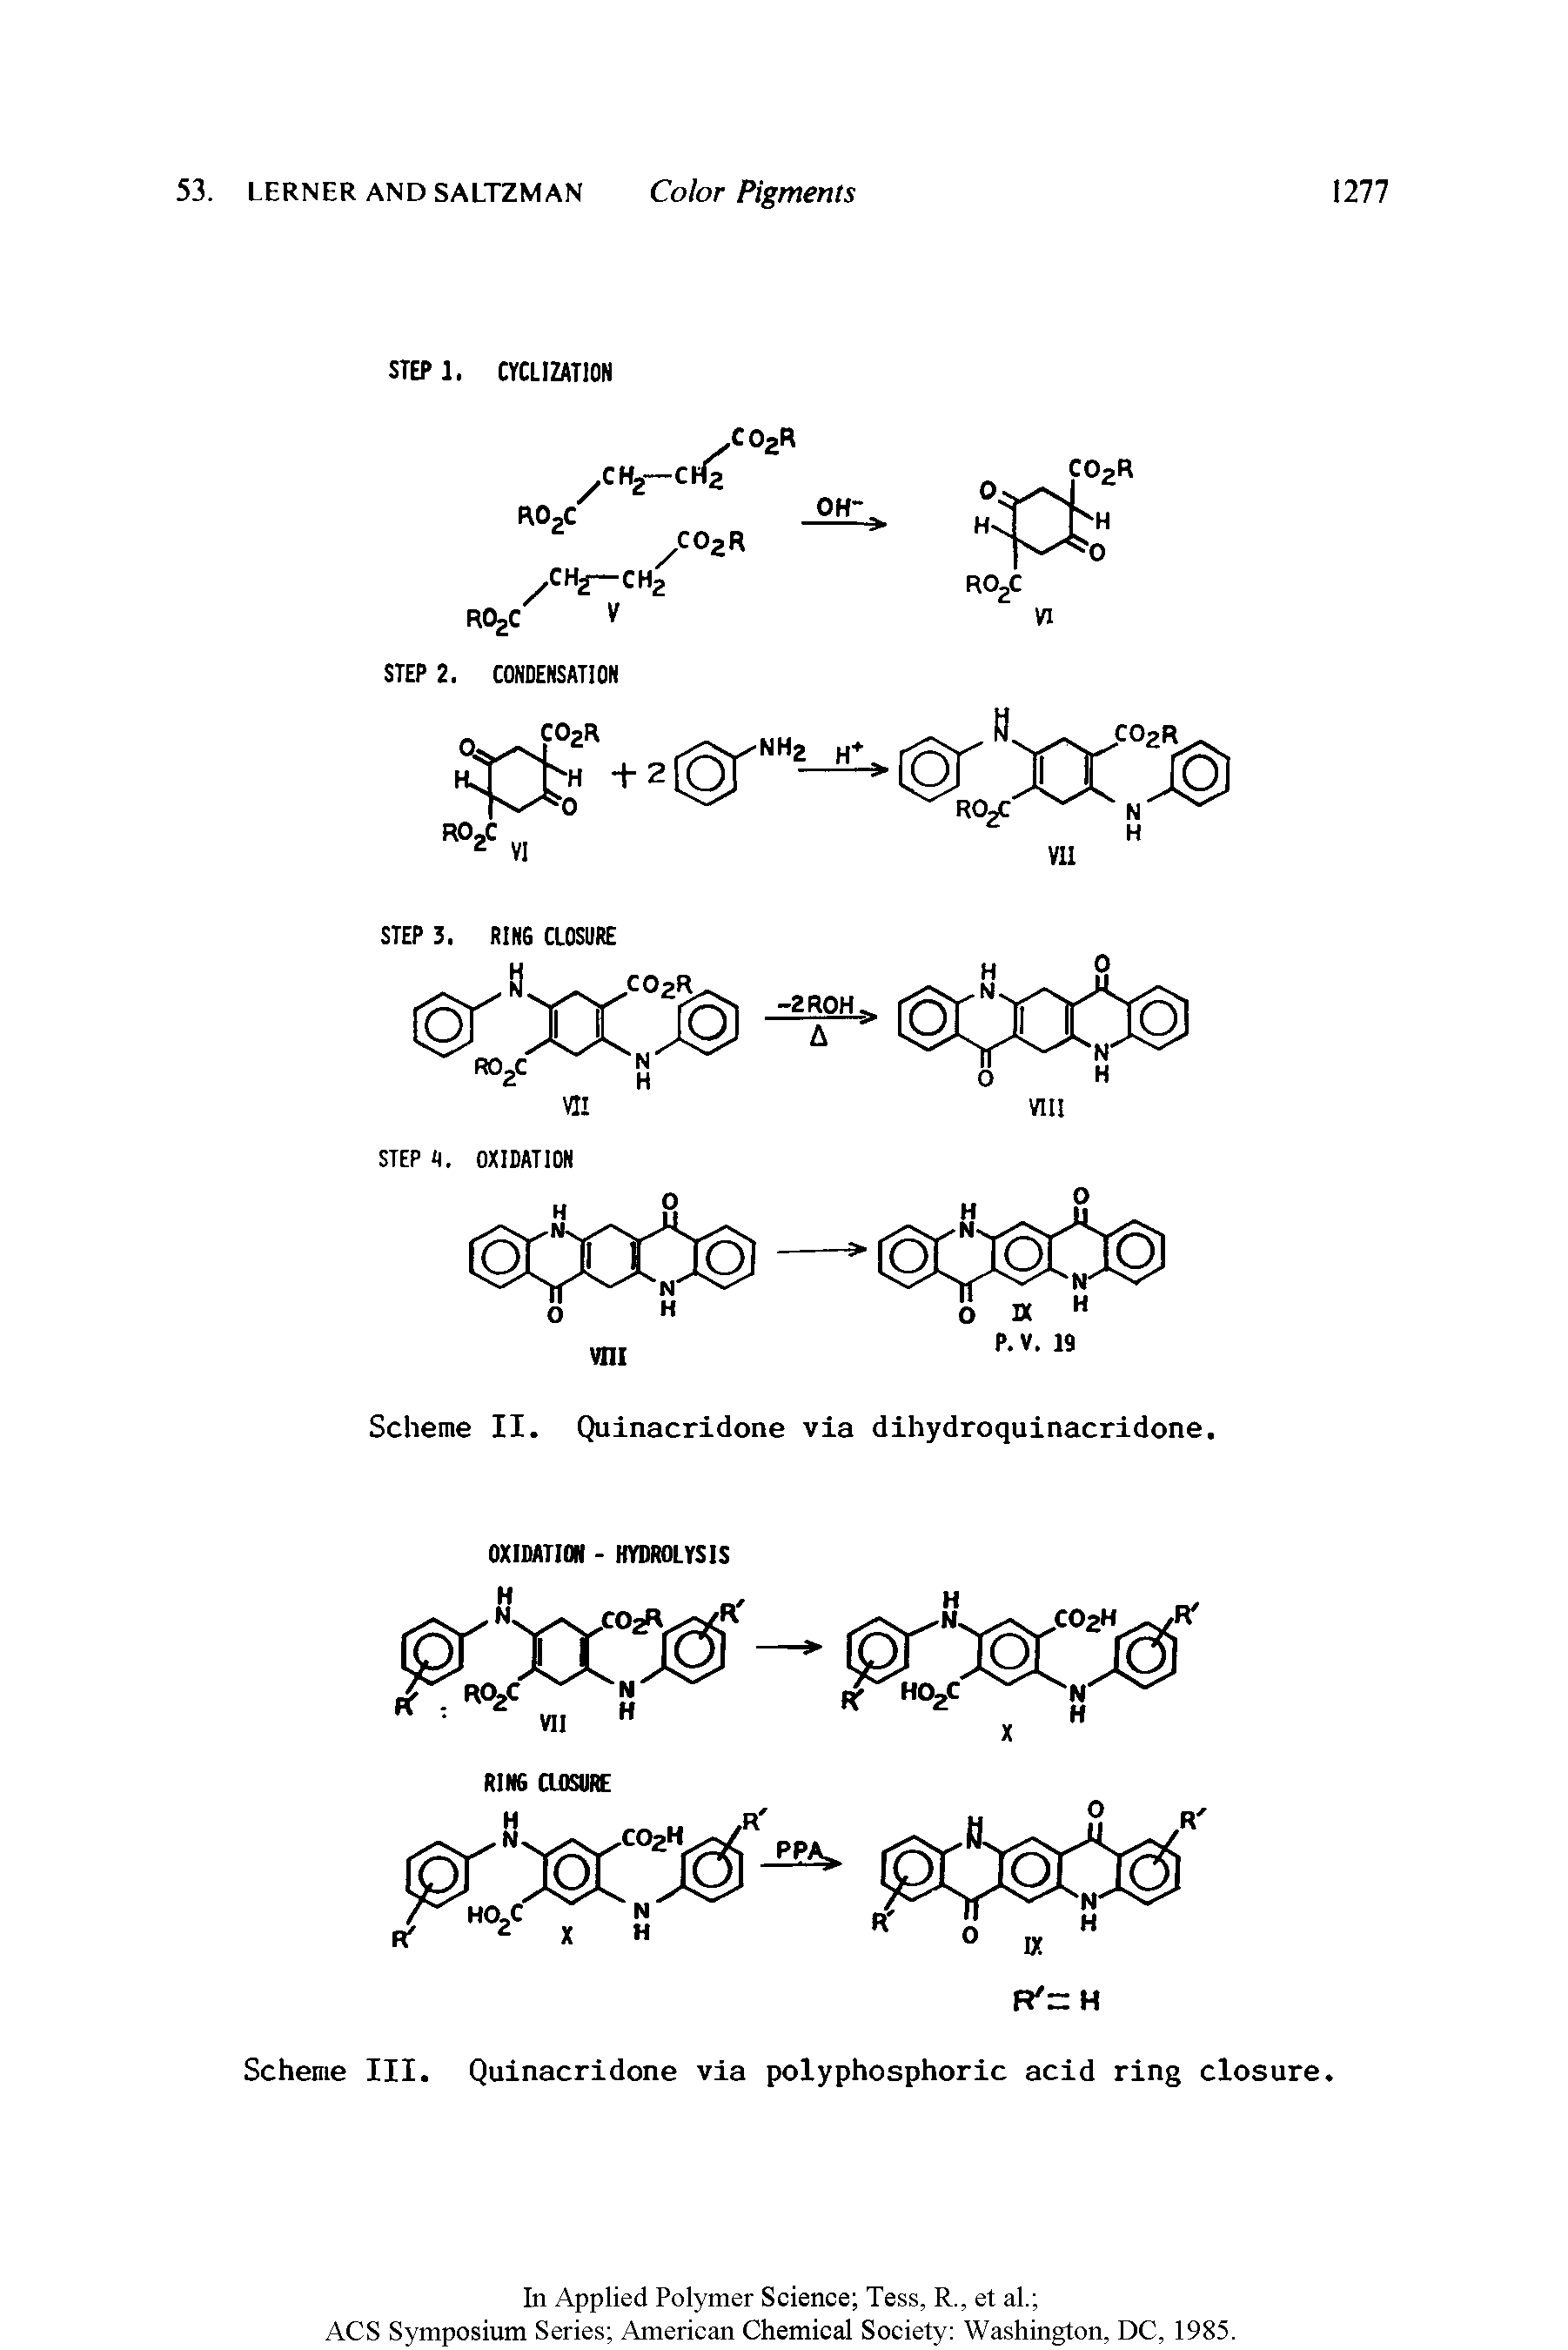 Scheme III. Quinacridone via polyphosphoric acid ring closure.